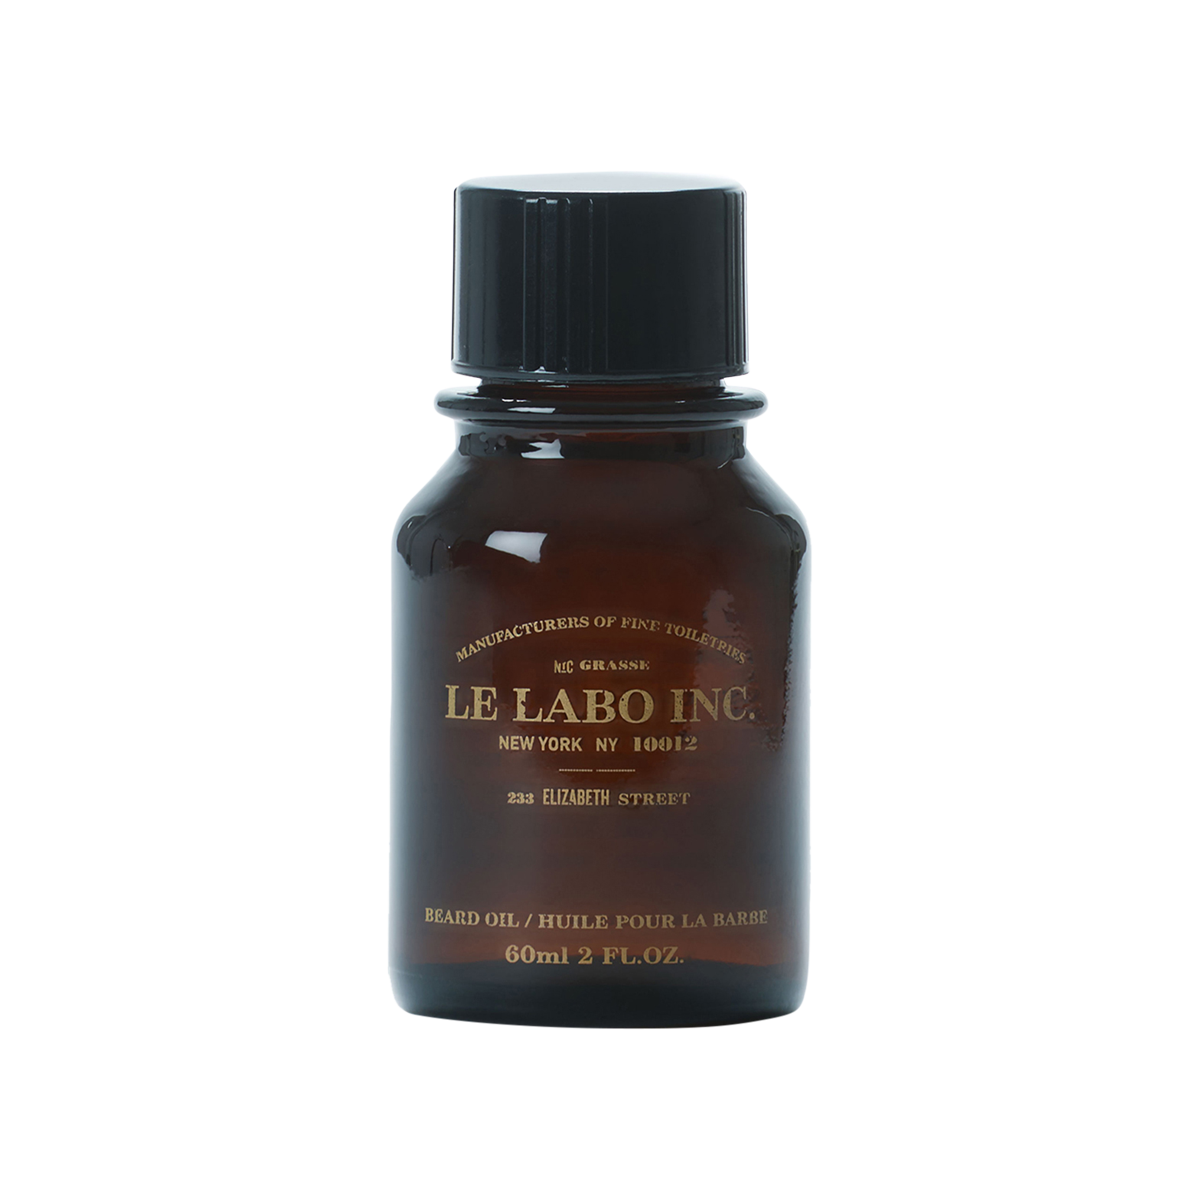 Le Labo fragrances - Beard Oil